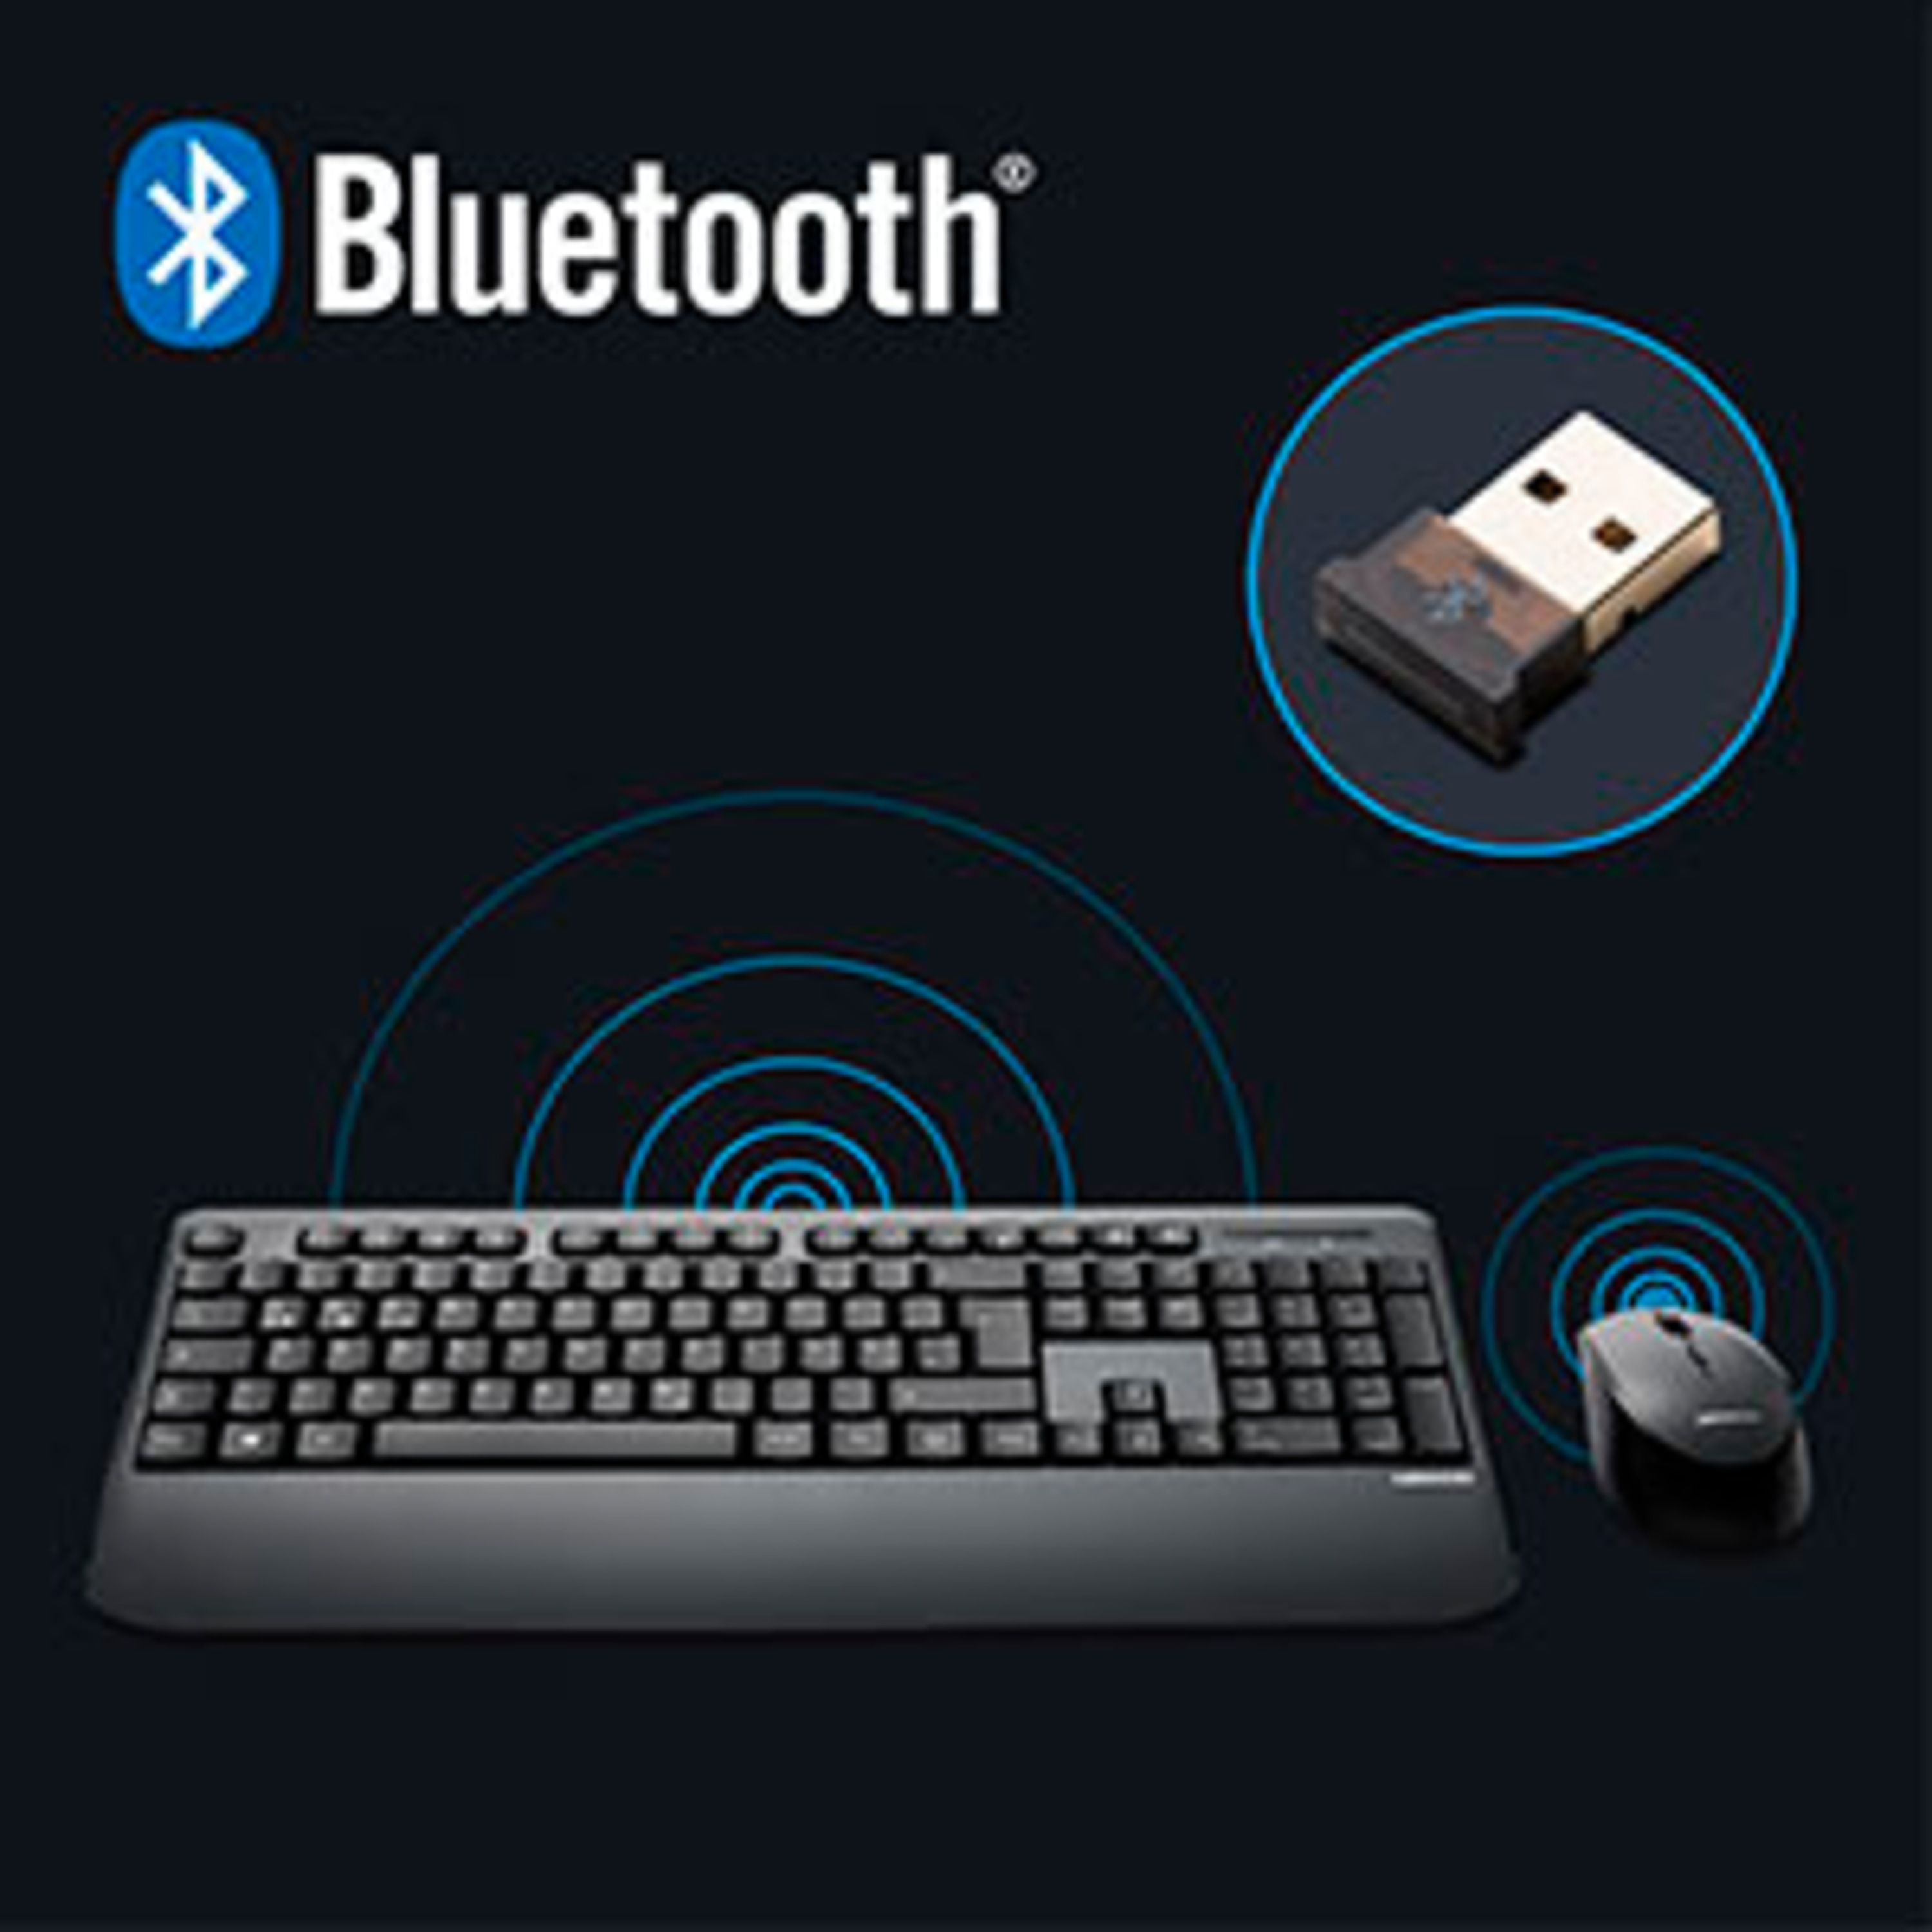 Drahtloser Komfort per Bluetooth